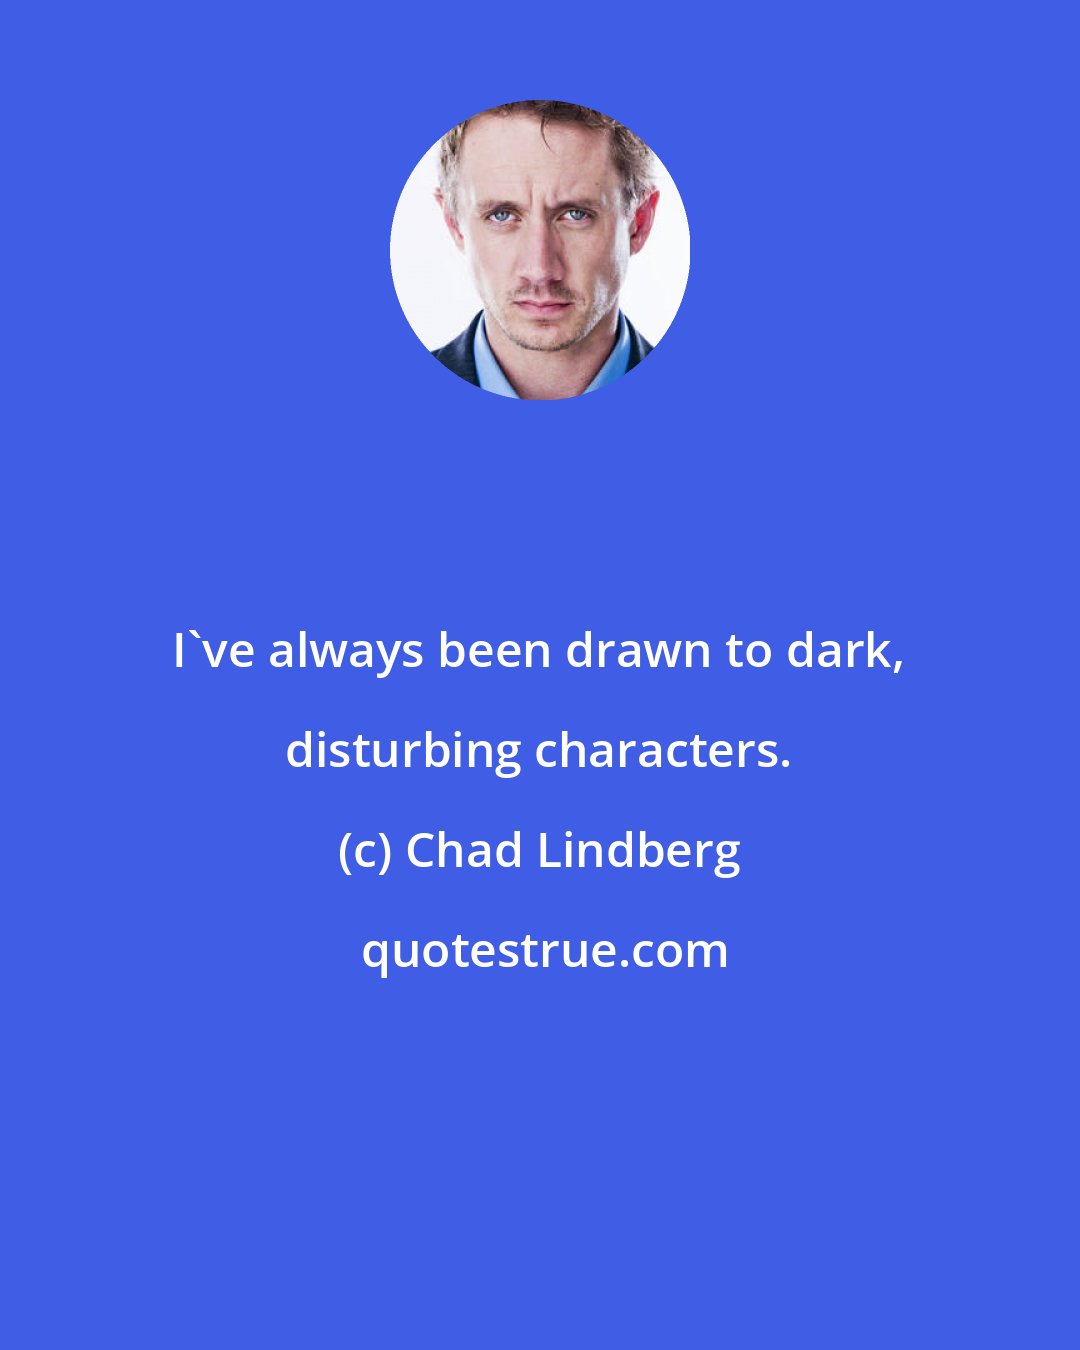 Chad Lindberg: I've always been drawn to dark, disturbing characters.